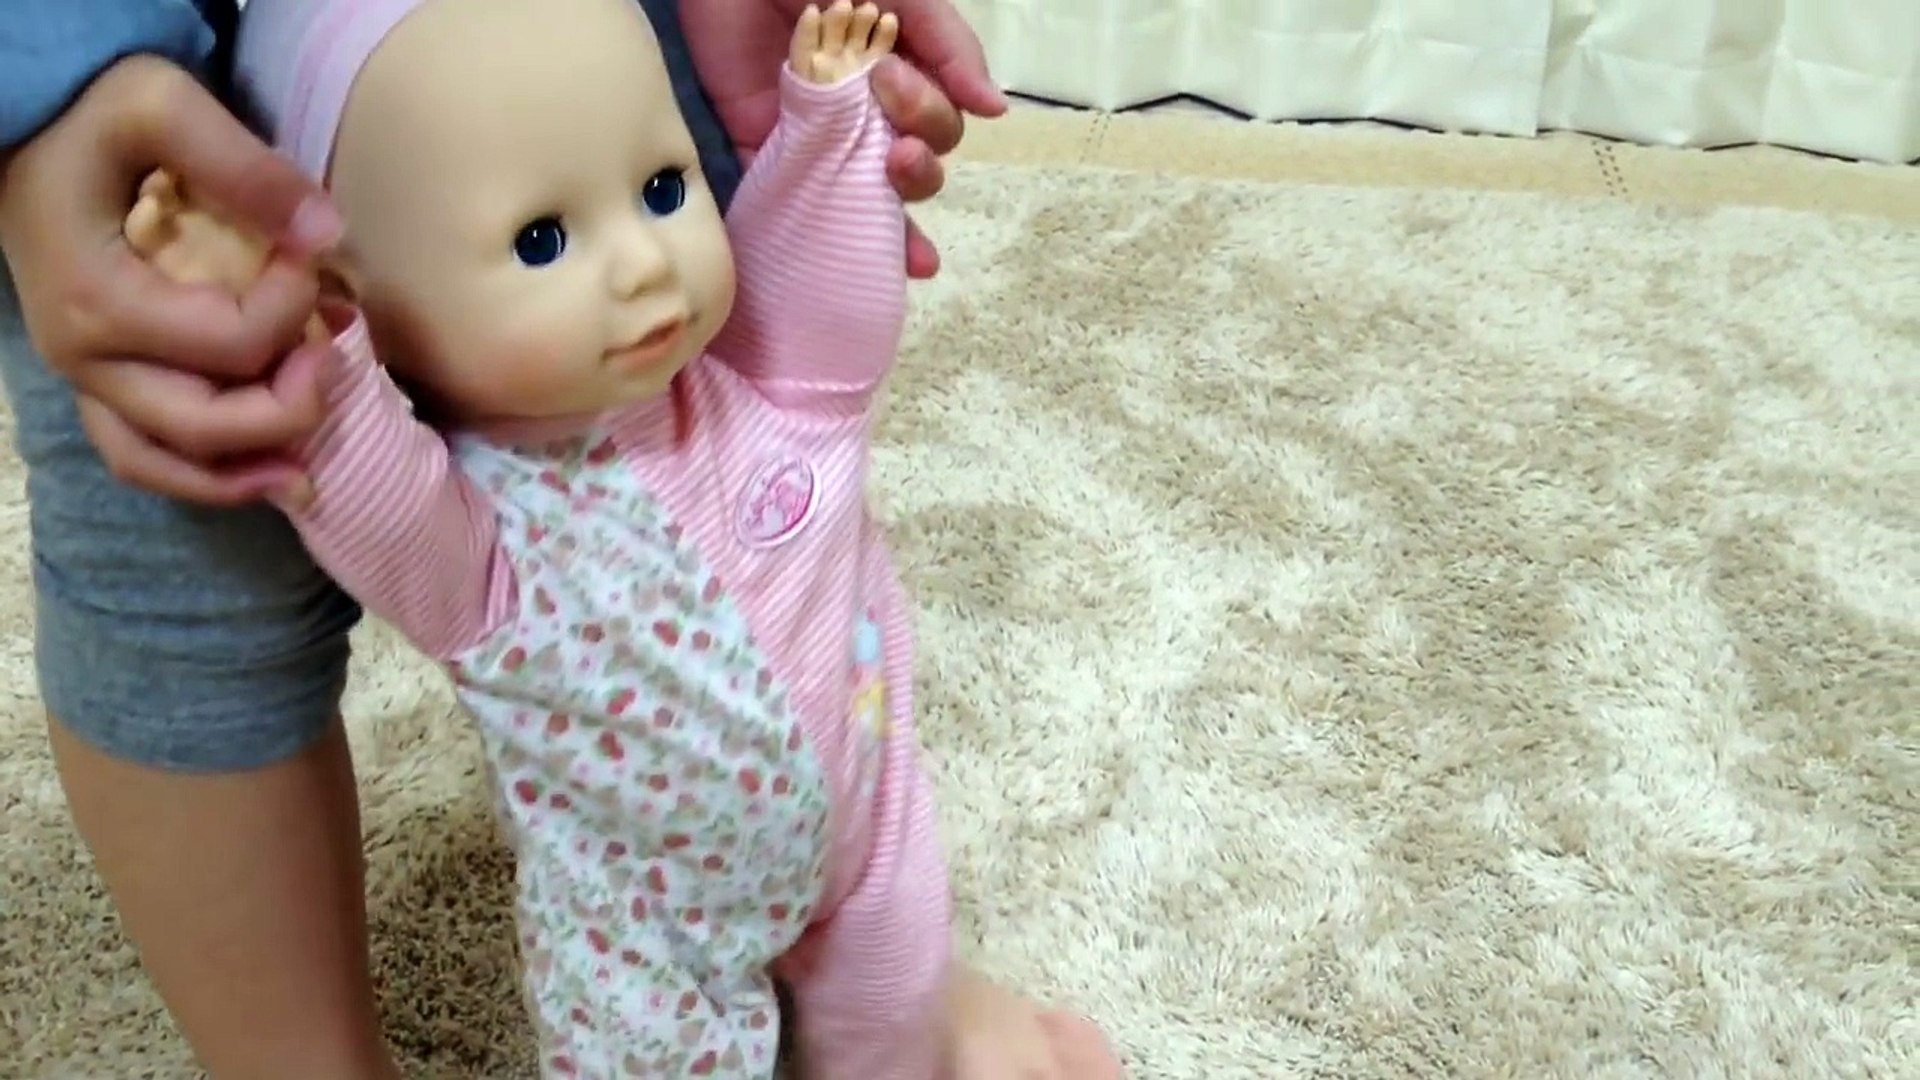 Baby Annabell Learn To Walk Baby Doll / ハイハイで動く 赤ちゃん人形 ベビー アナベル -  Dailymotion Video